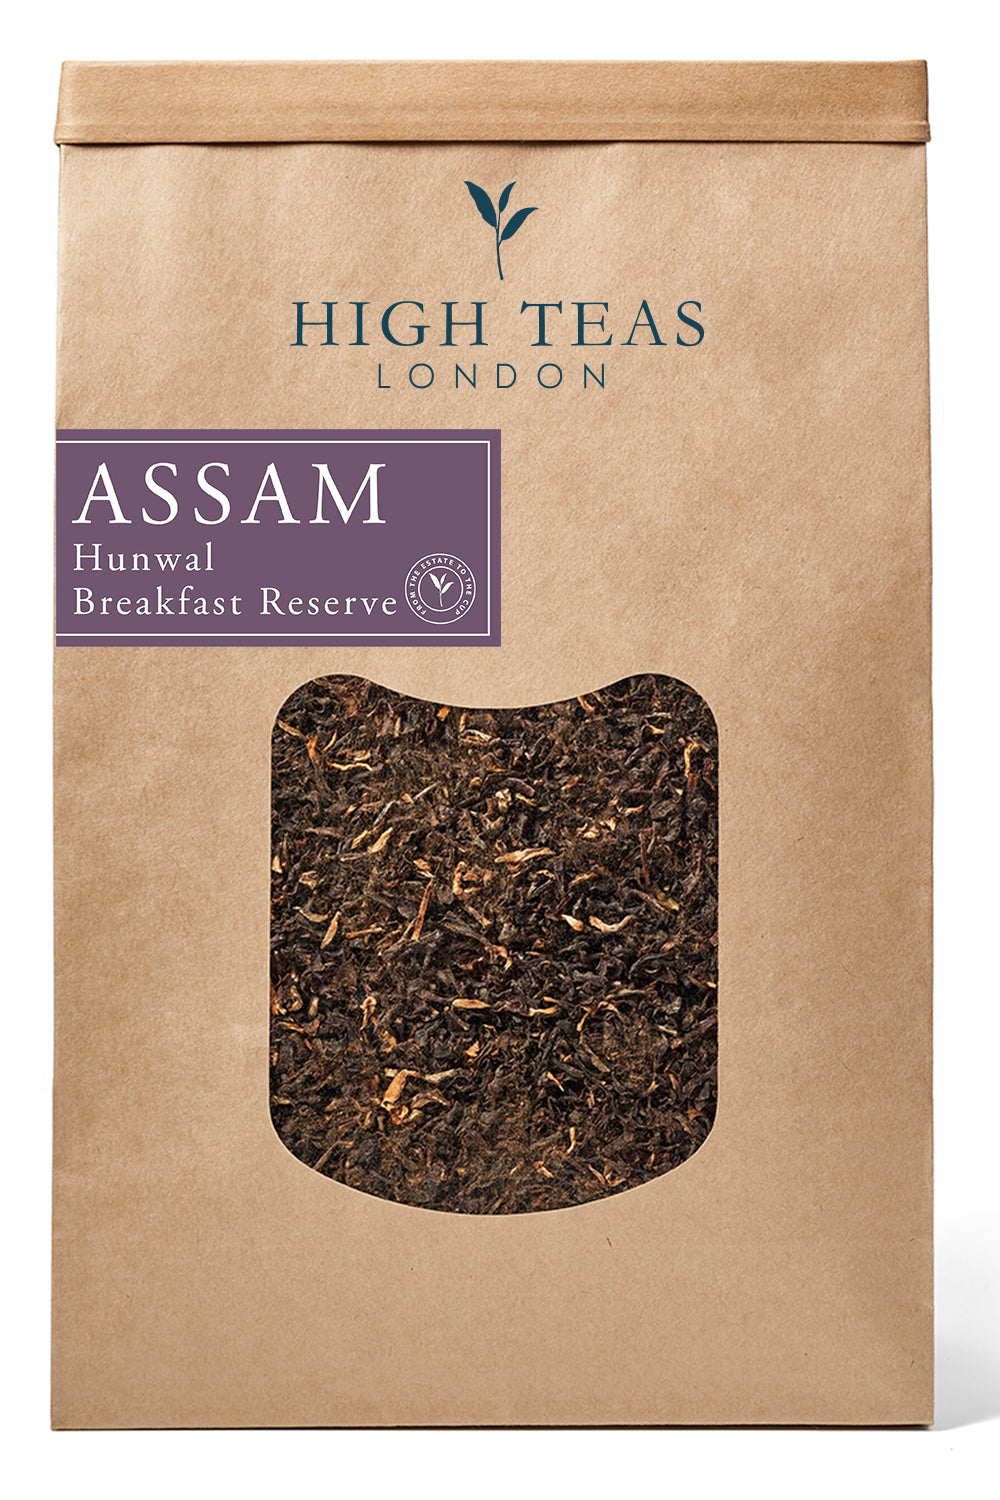 Assam Hunwal Breakfast Reserve-500g-Loose Leaf Tea-High Teas